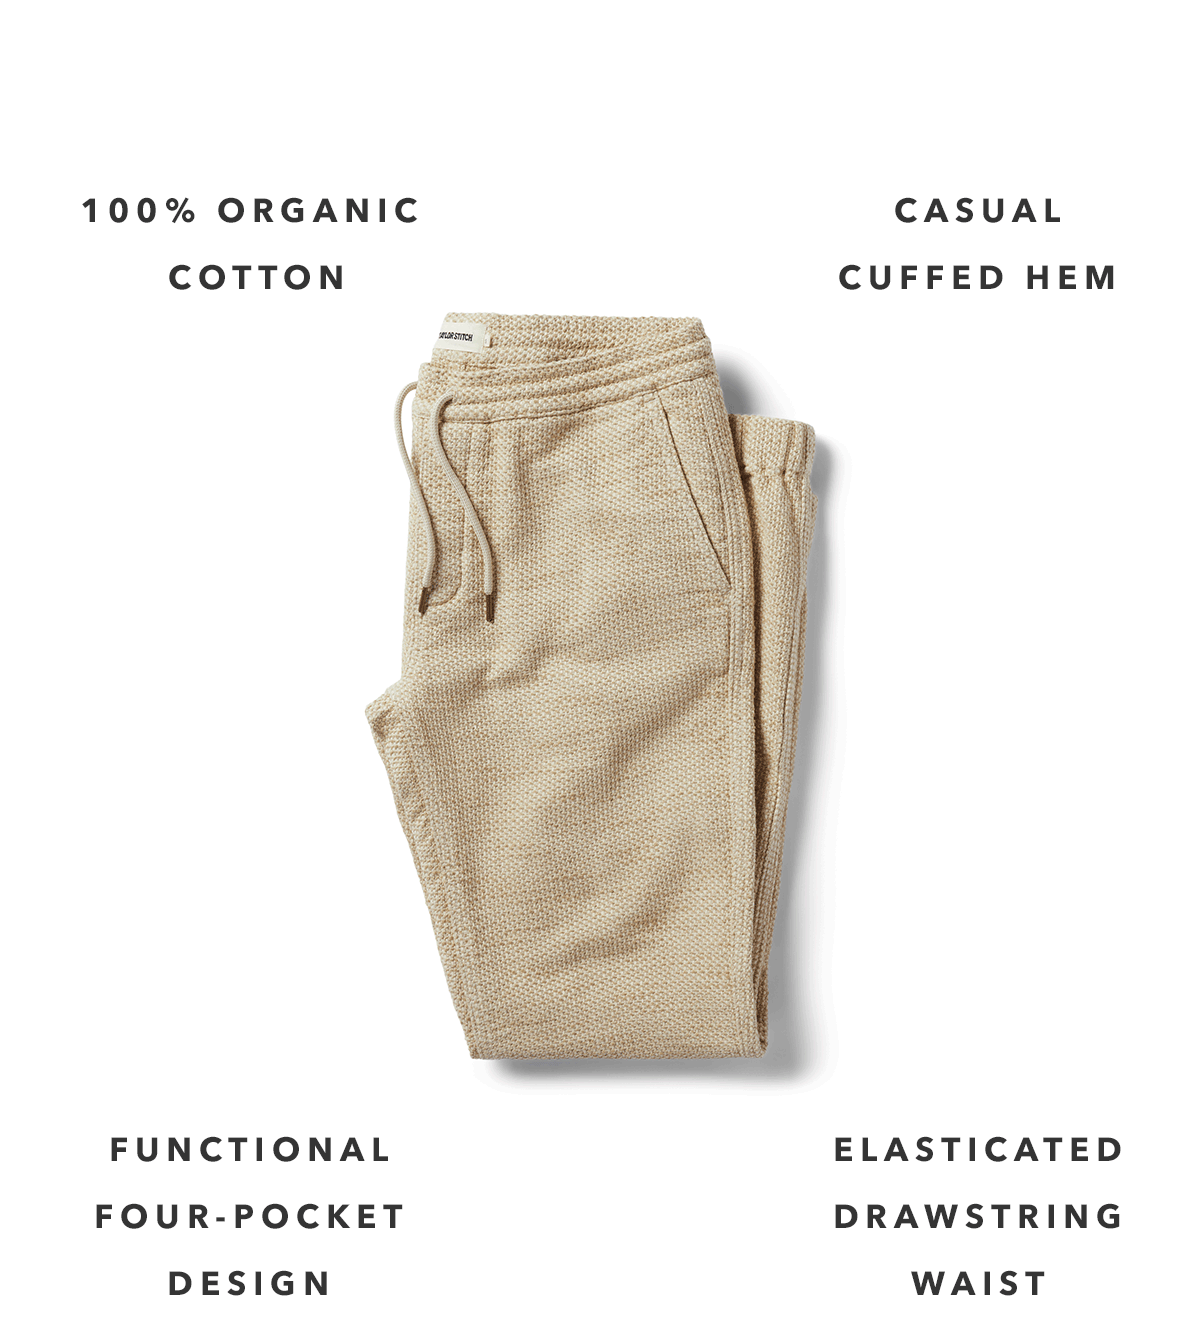 100% organic cotton Elasticated drawstring waist. Functional four-pocket design.  Casual cuffed hem.